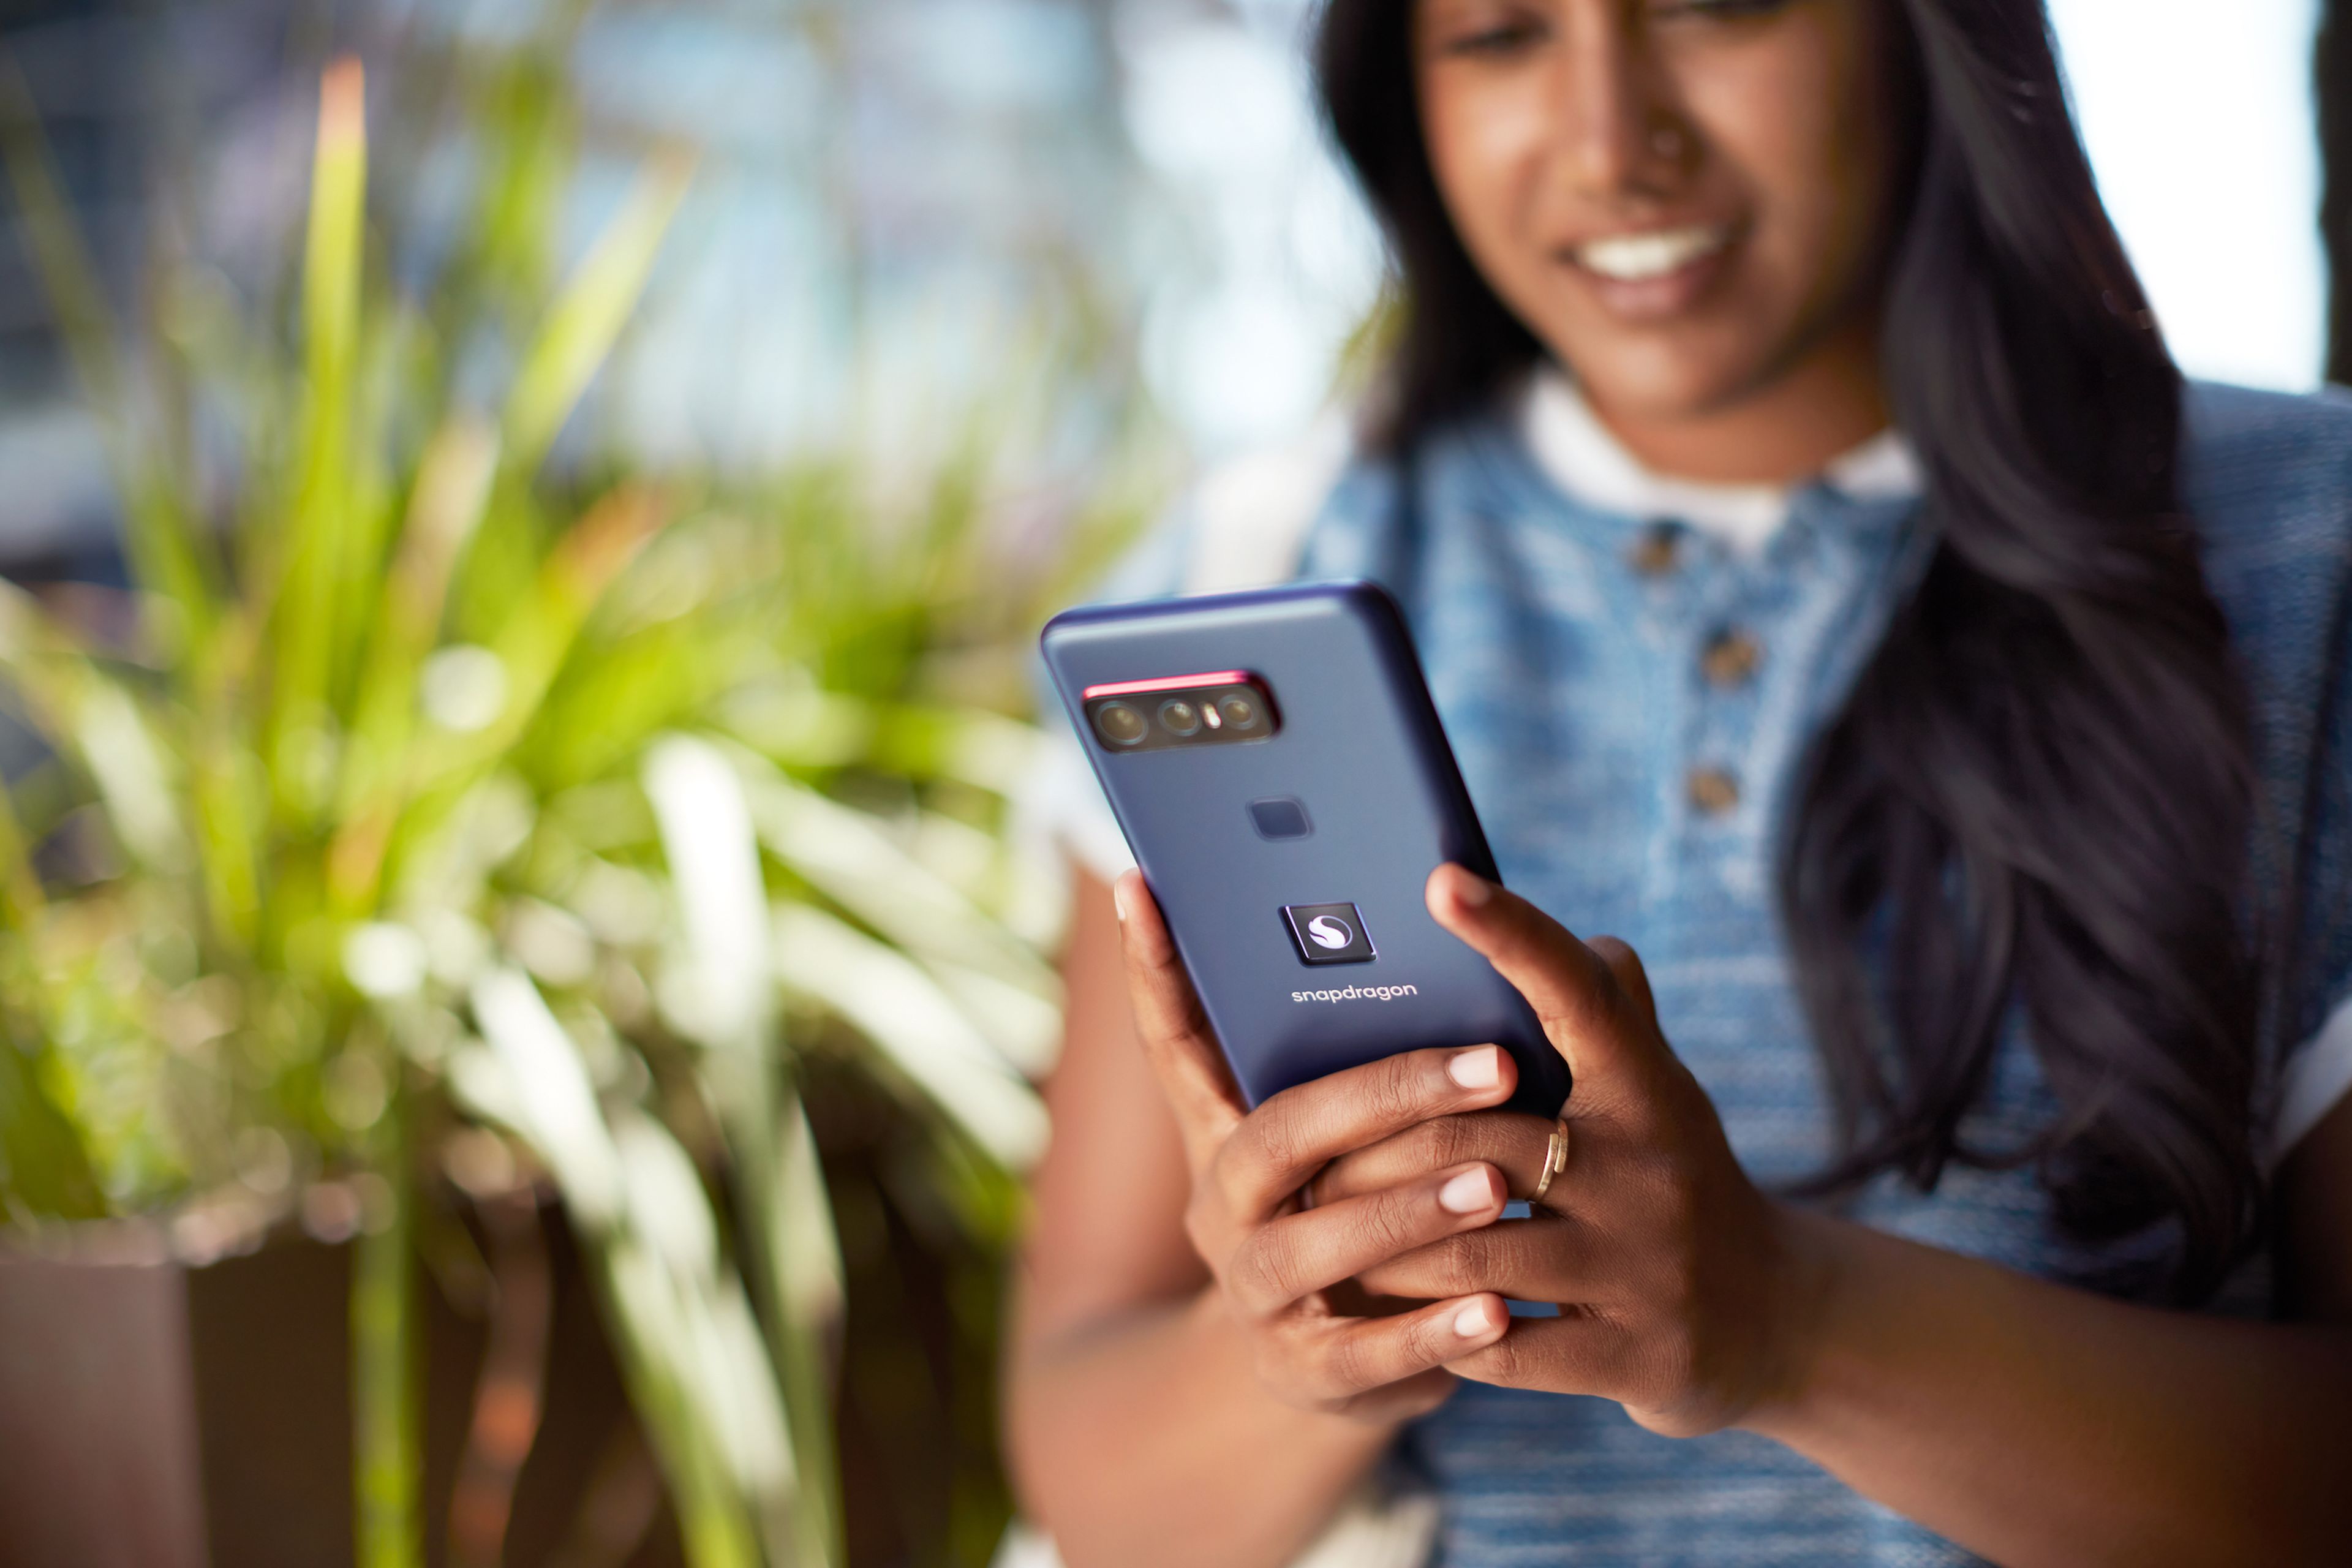 Smartphone for Snapdragon Insiders